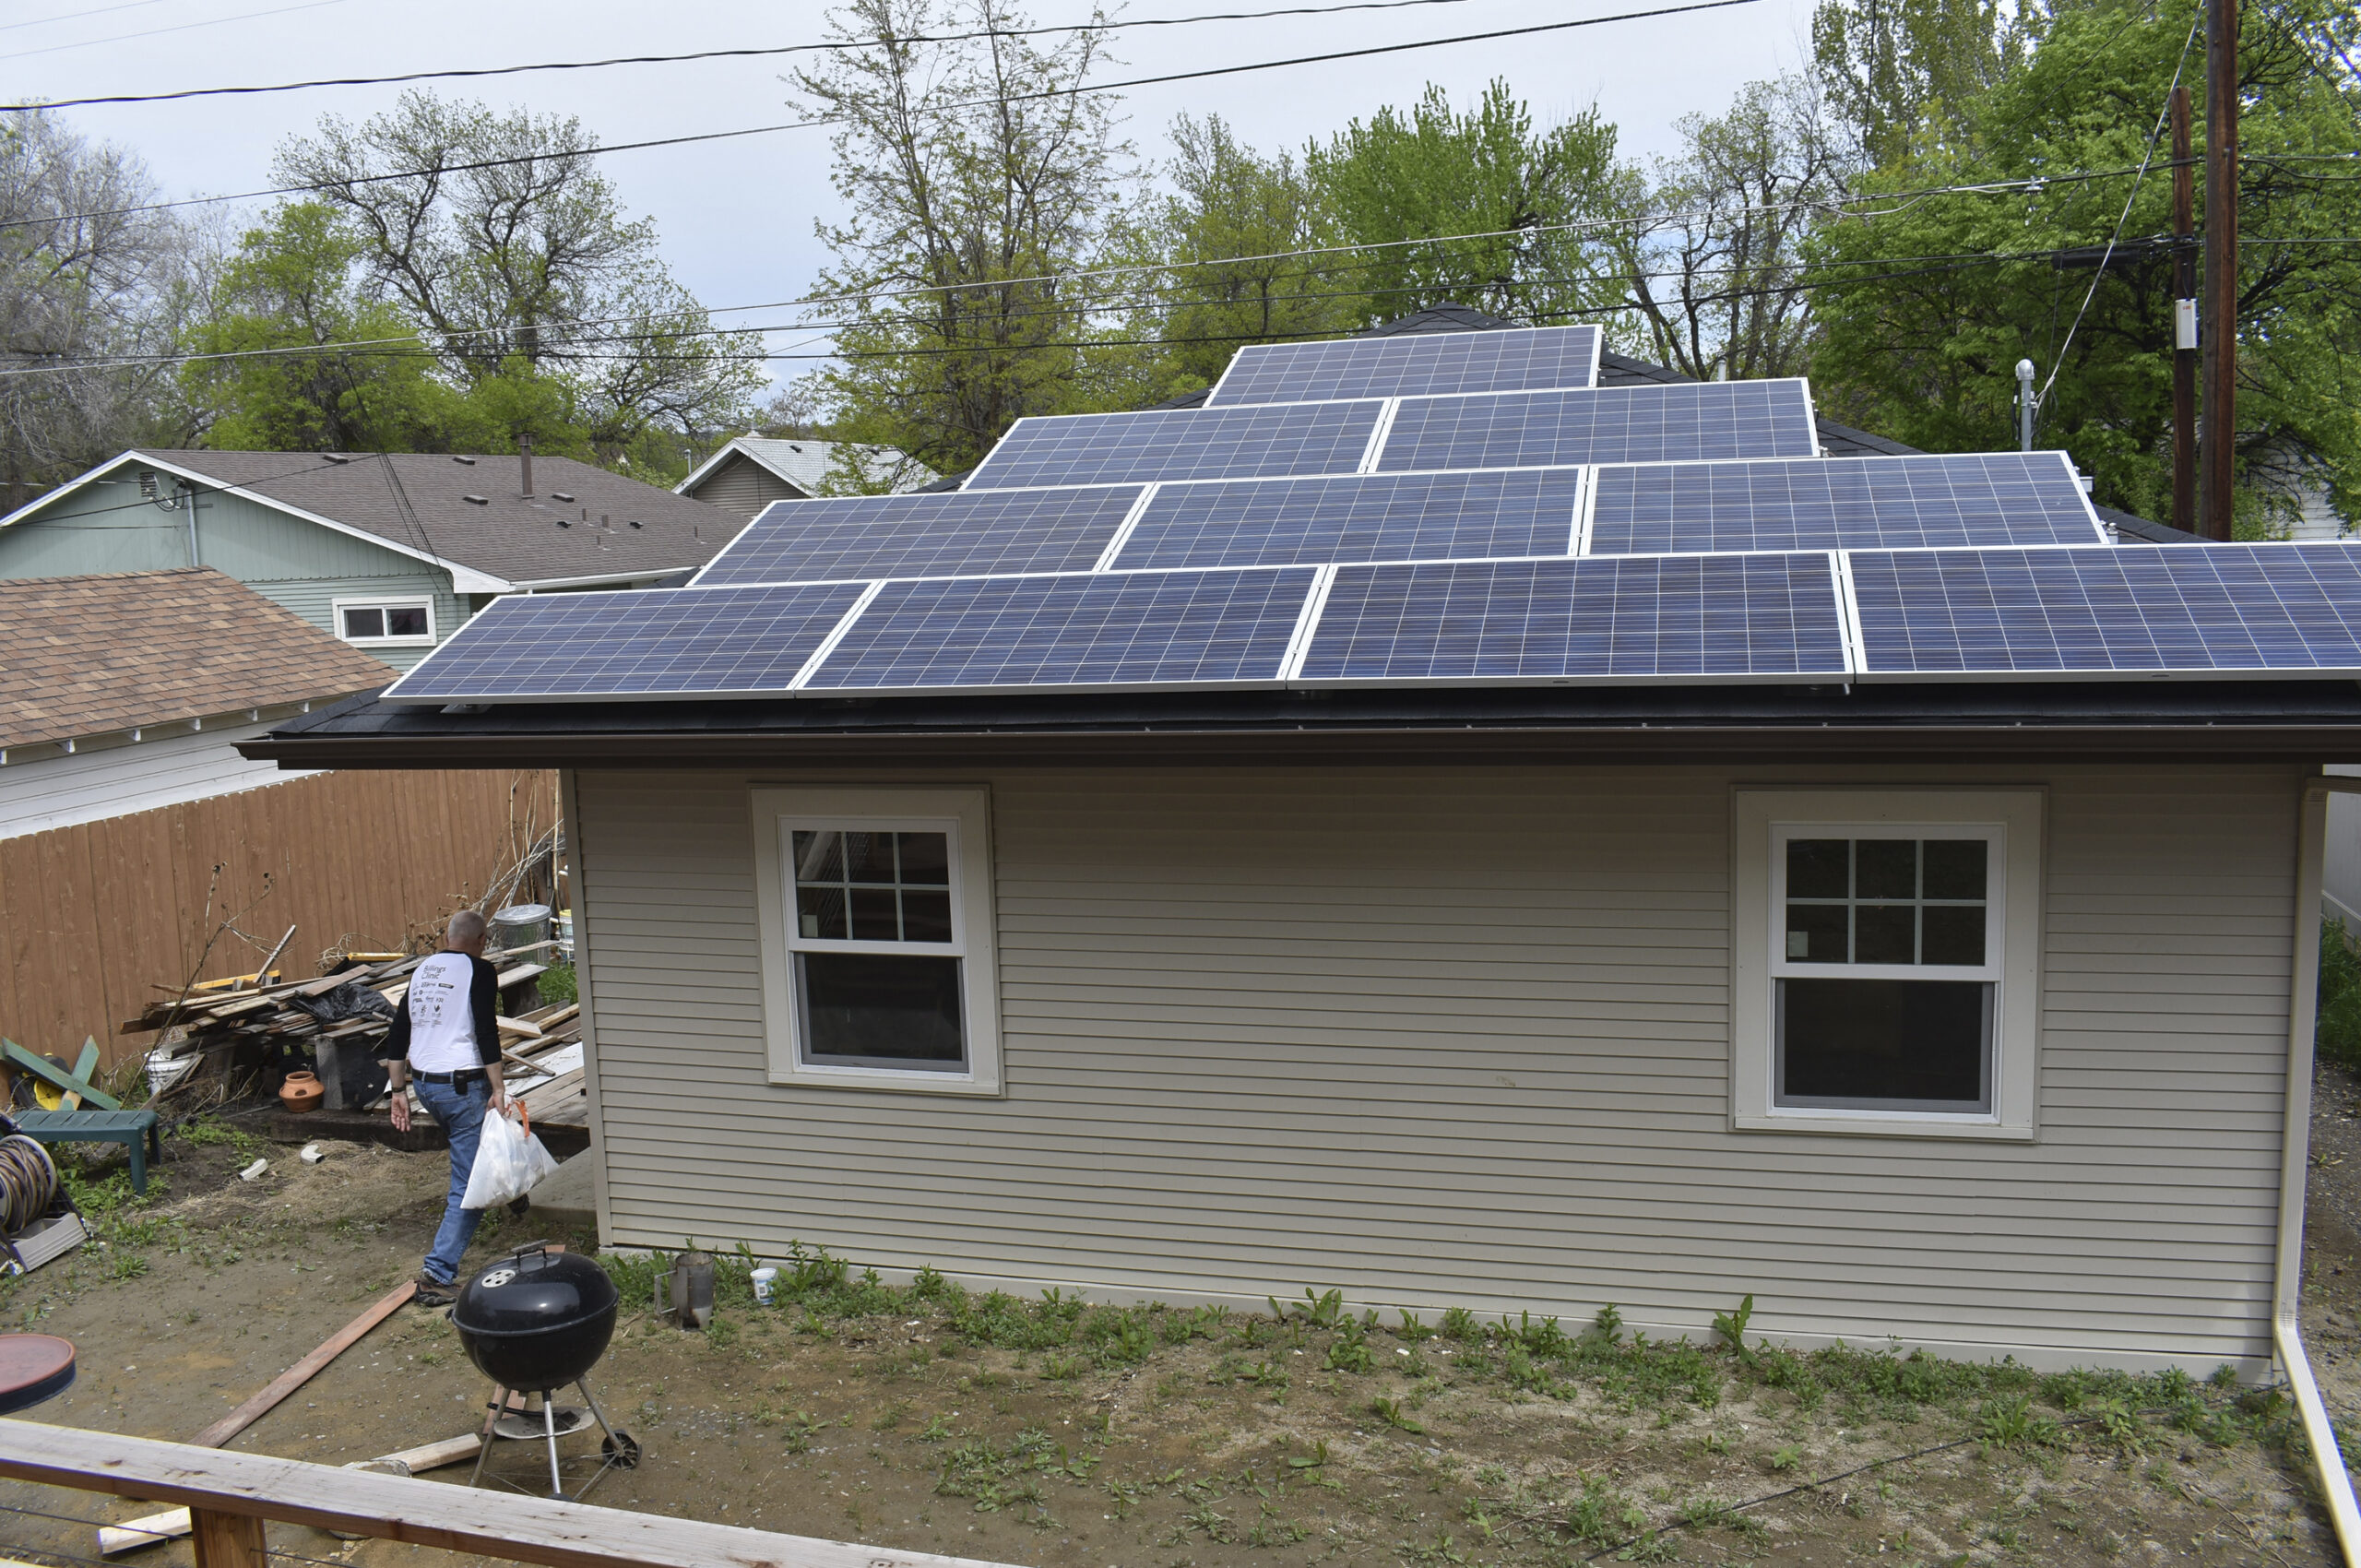 Solar panels on a garage